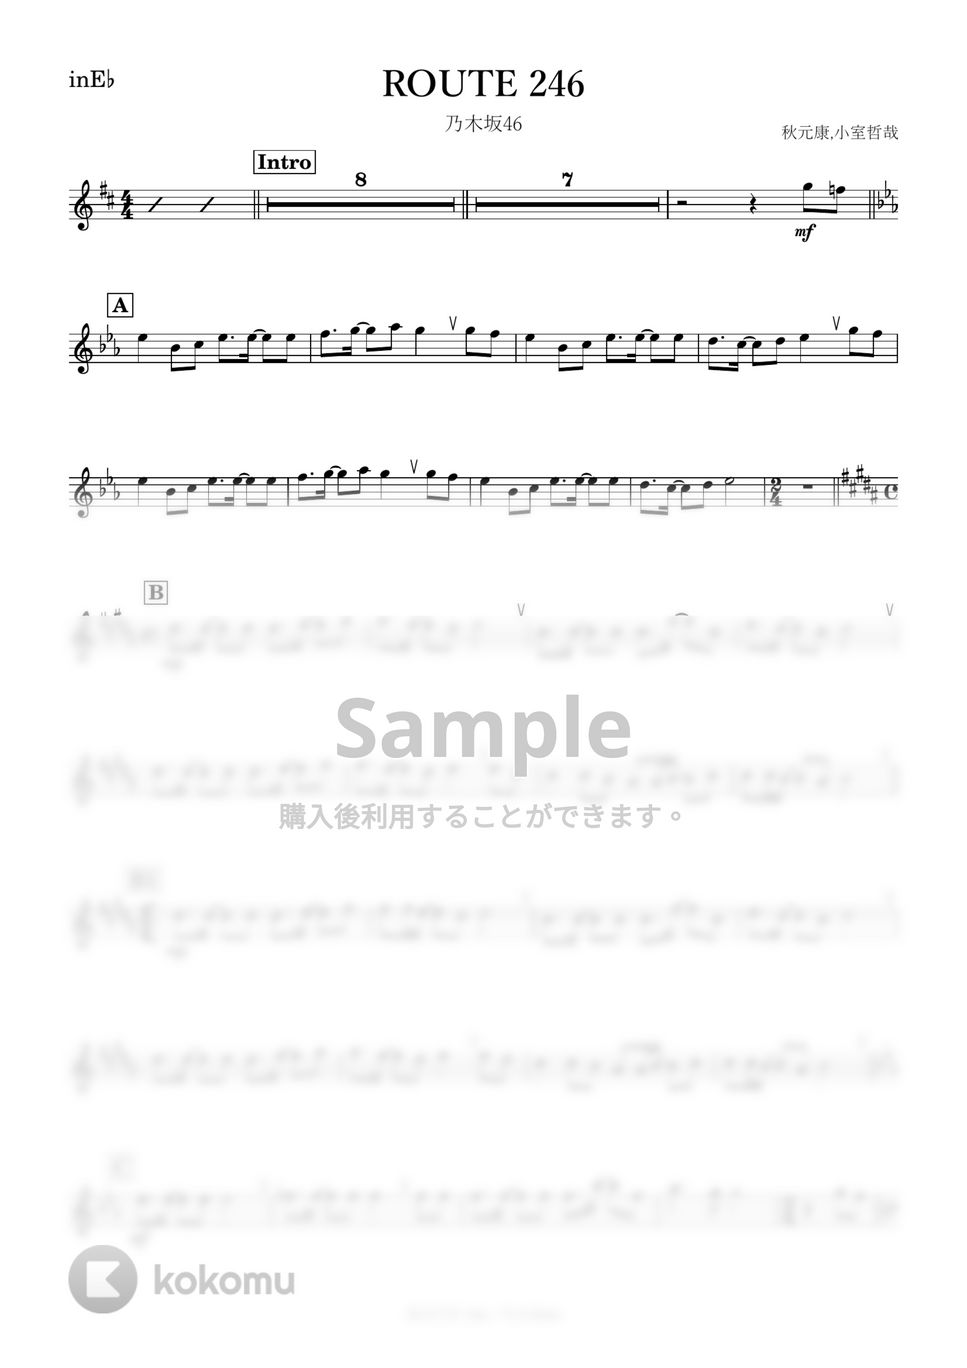 乃木坂46 - ROUTE 246 (E♭) by kanamusic